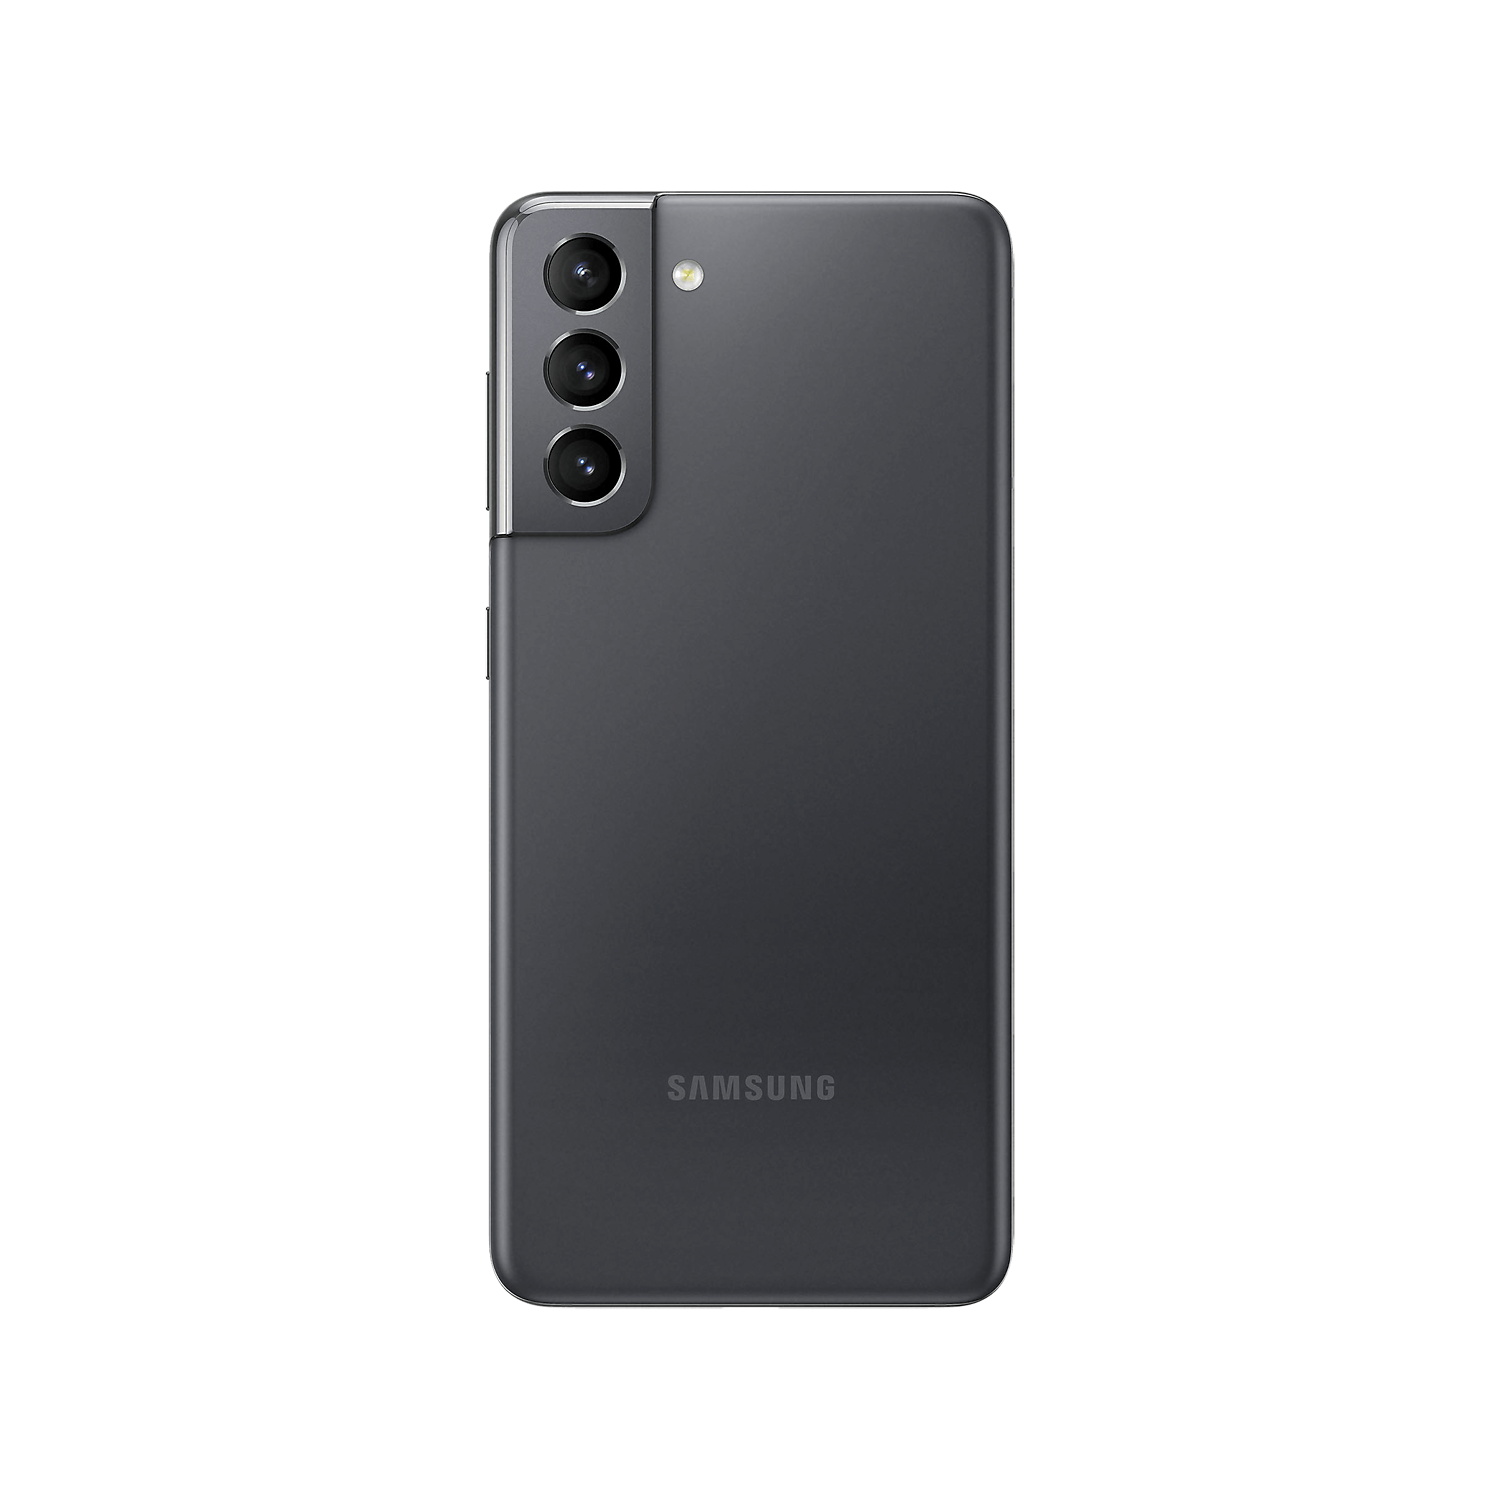 Samsung Galaxy S21 5G 128GB Phantom Grey - Unlocked - Fair Condition